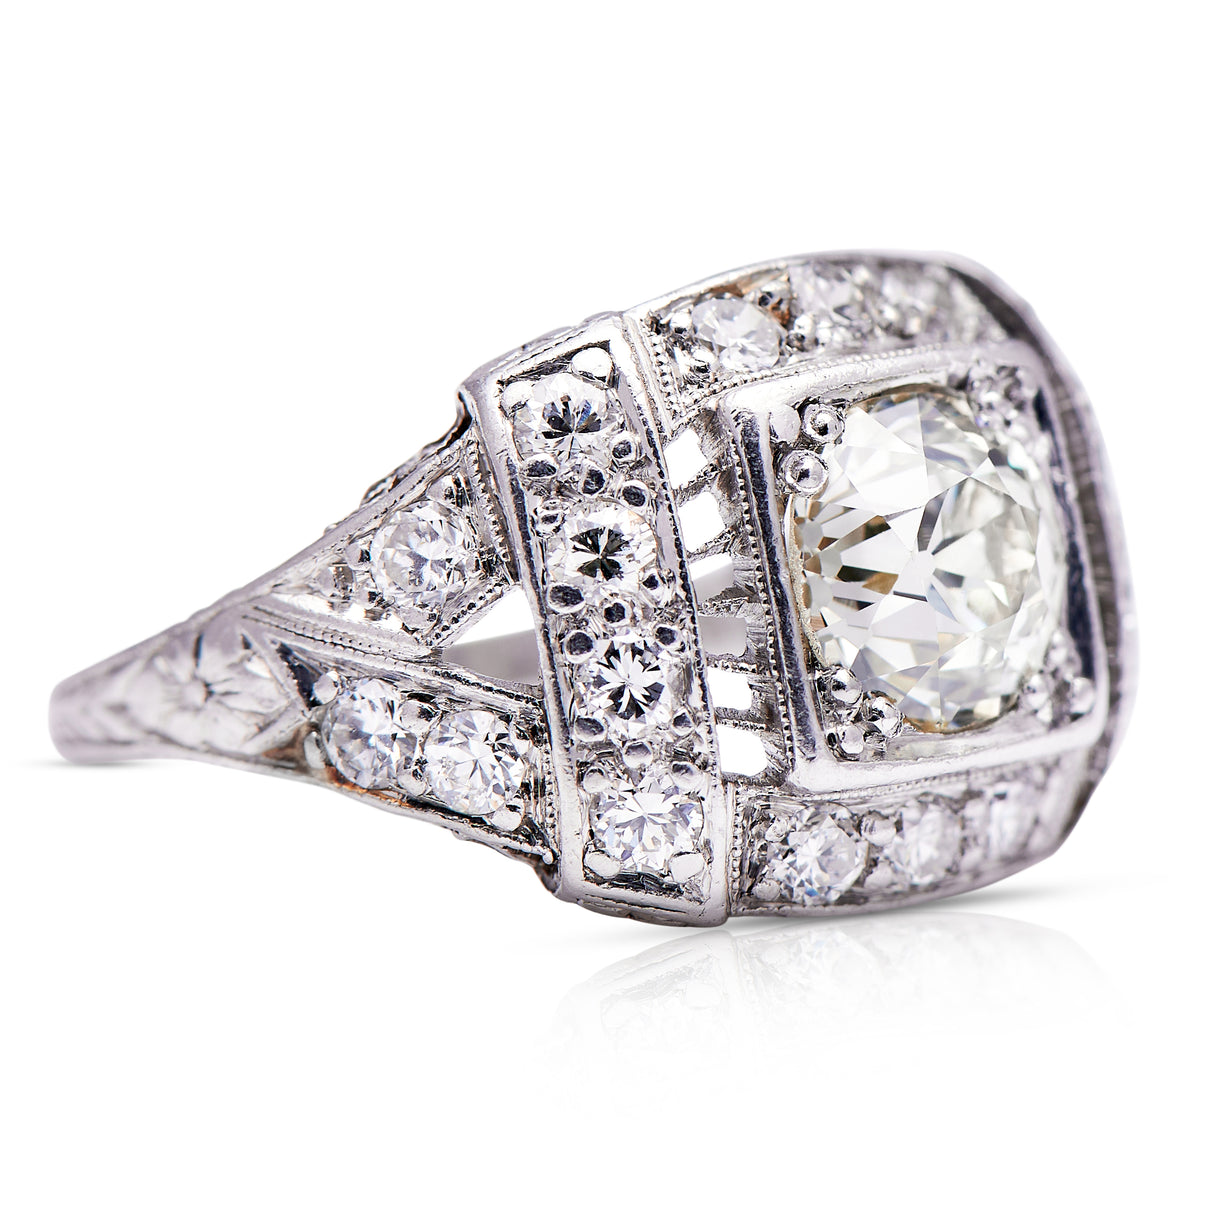 1920s Art Deco, diamond engagement ring